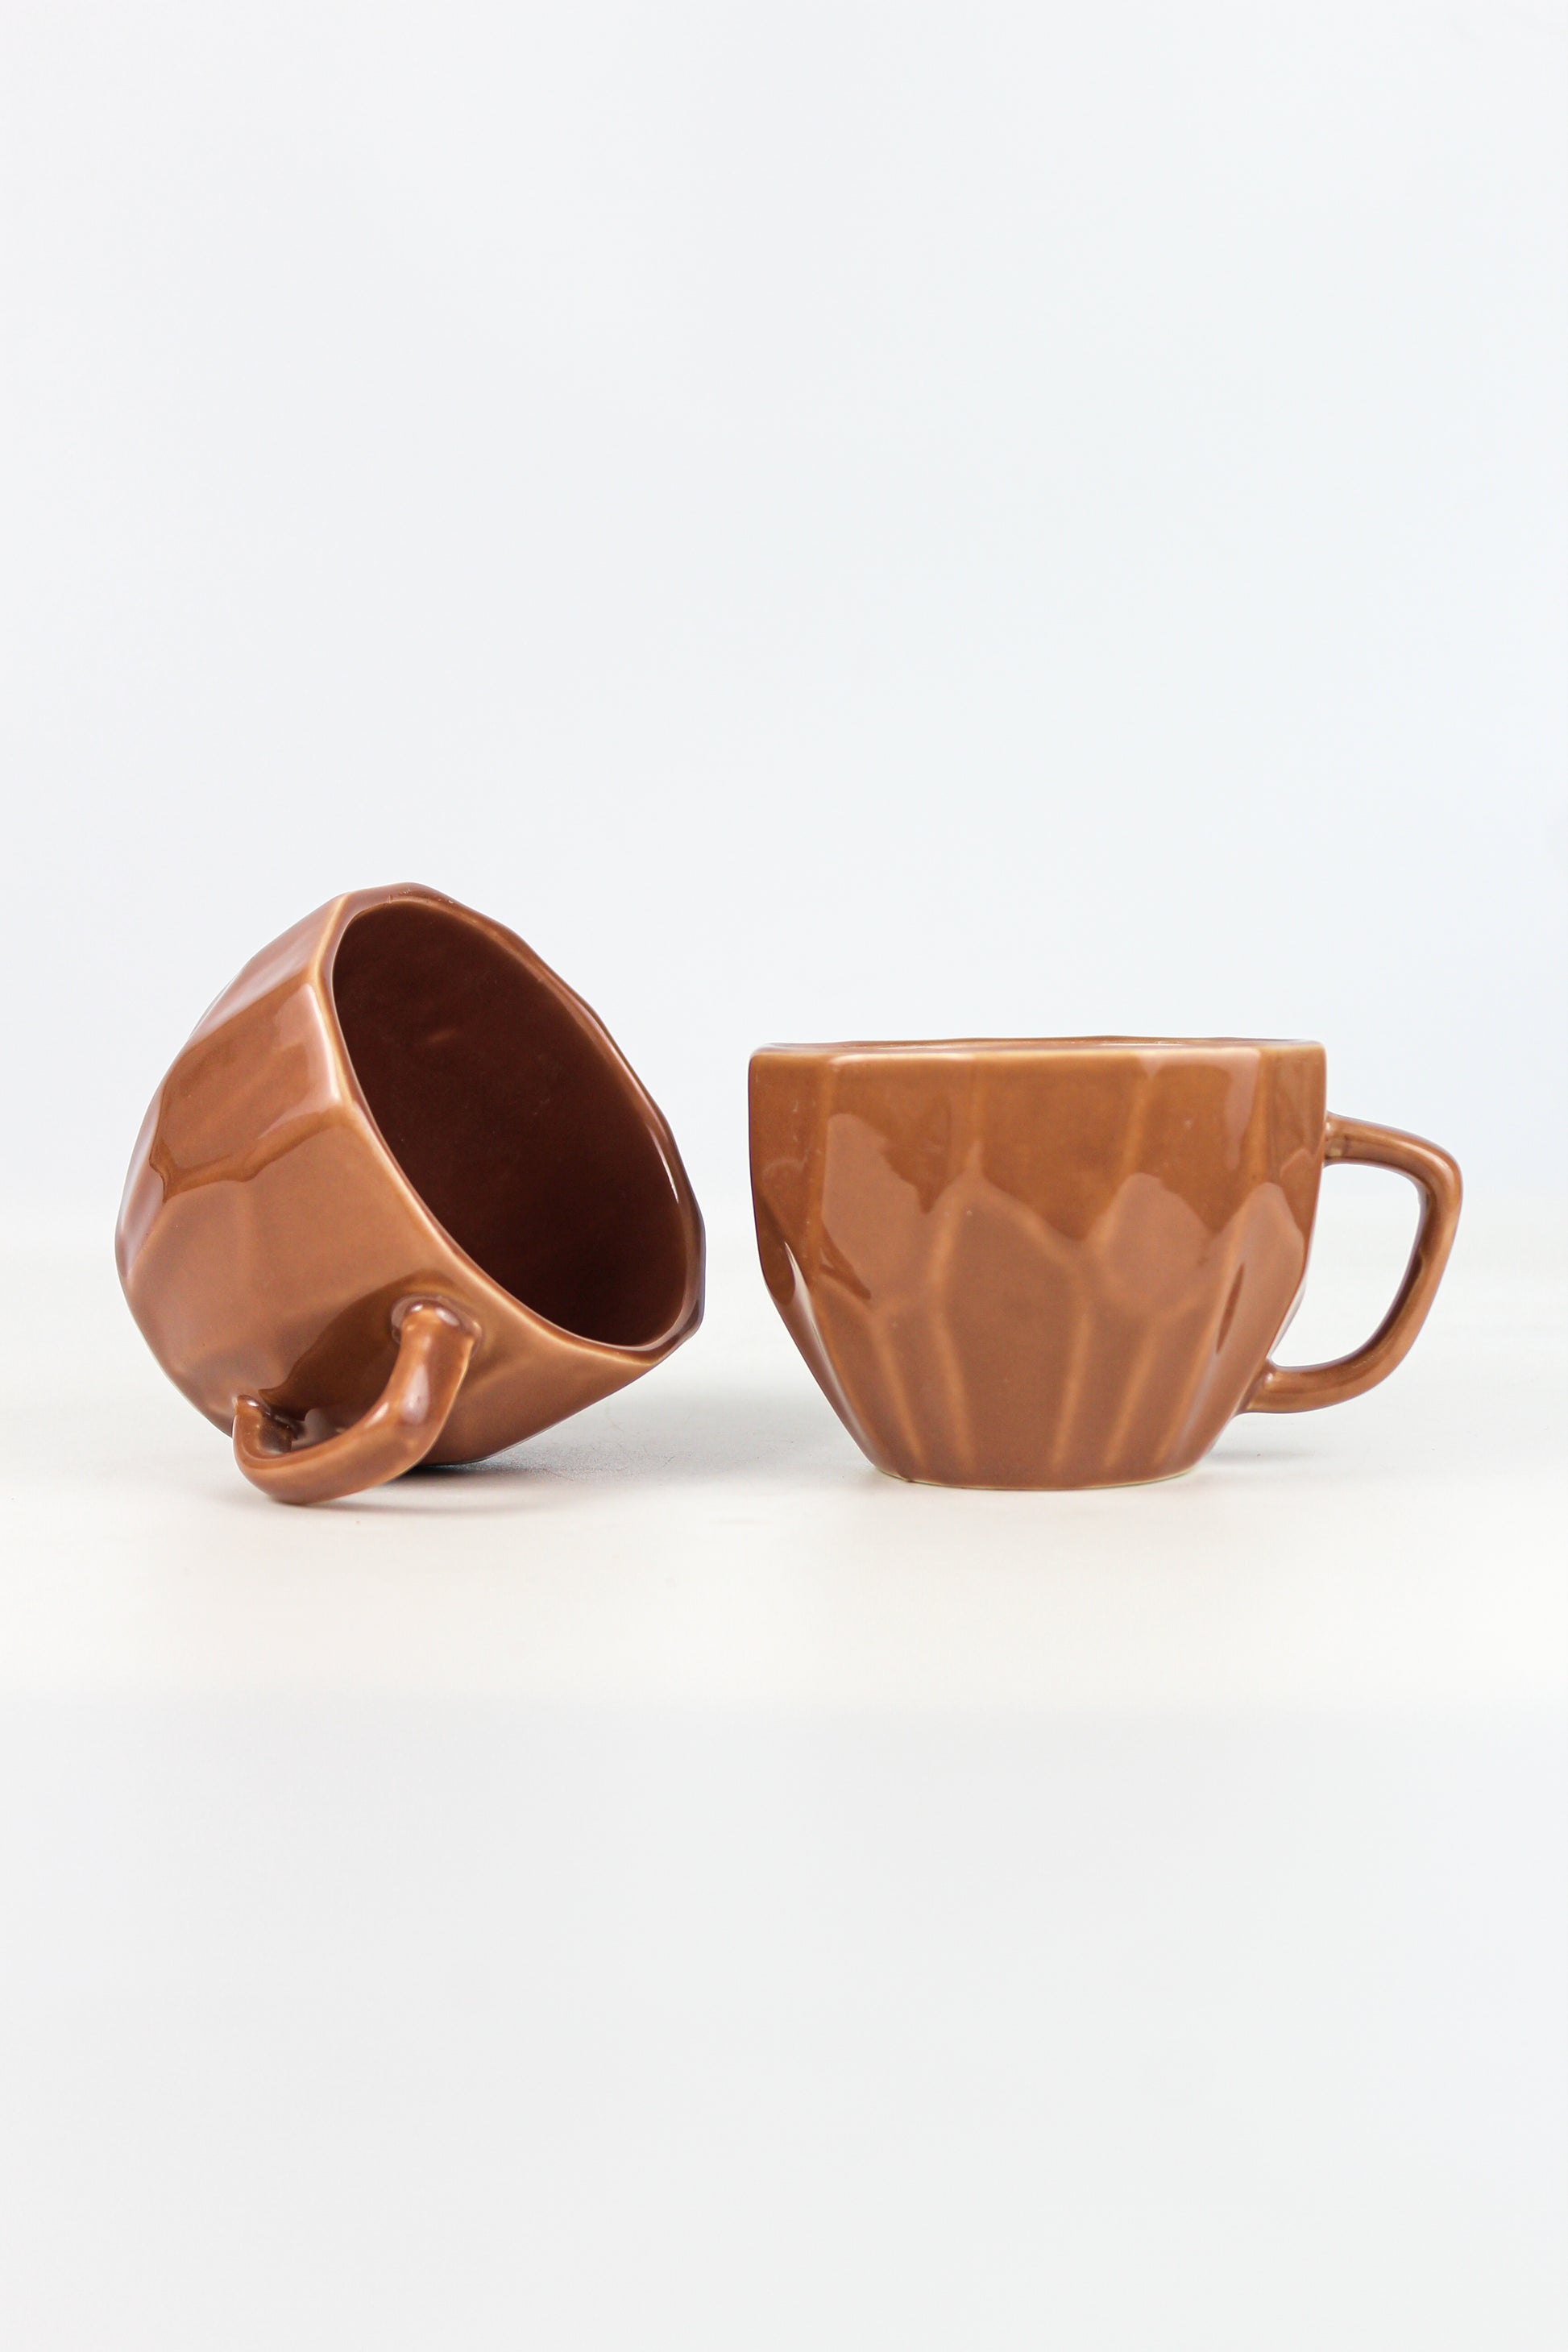 Galao - Choco Brown Handcrafted Ceramic Coffee Mugs